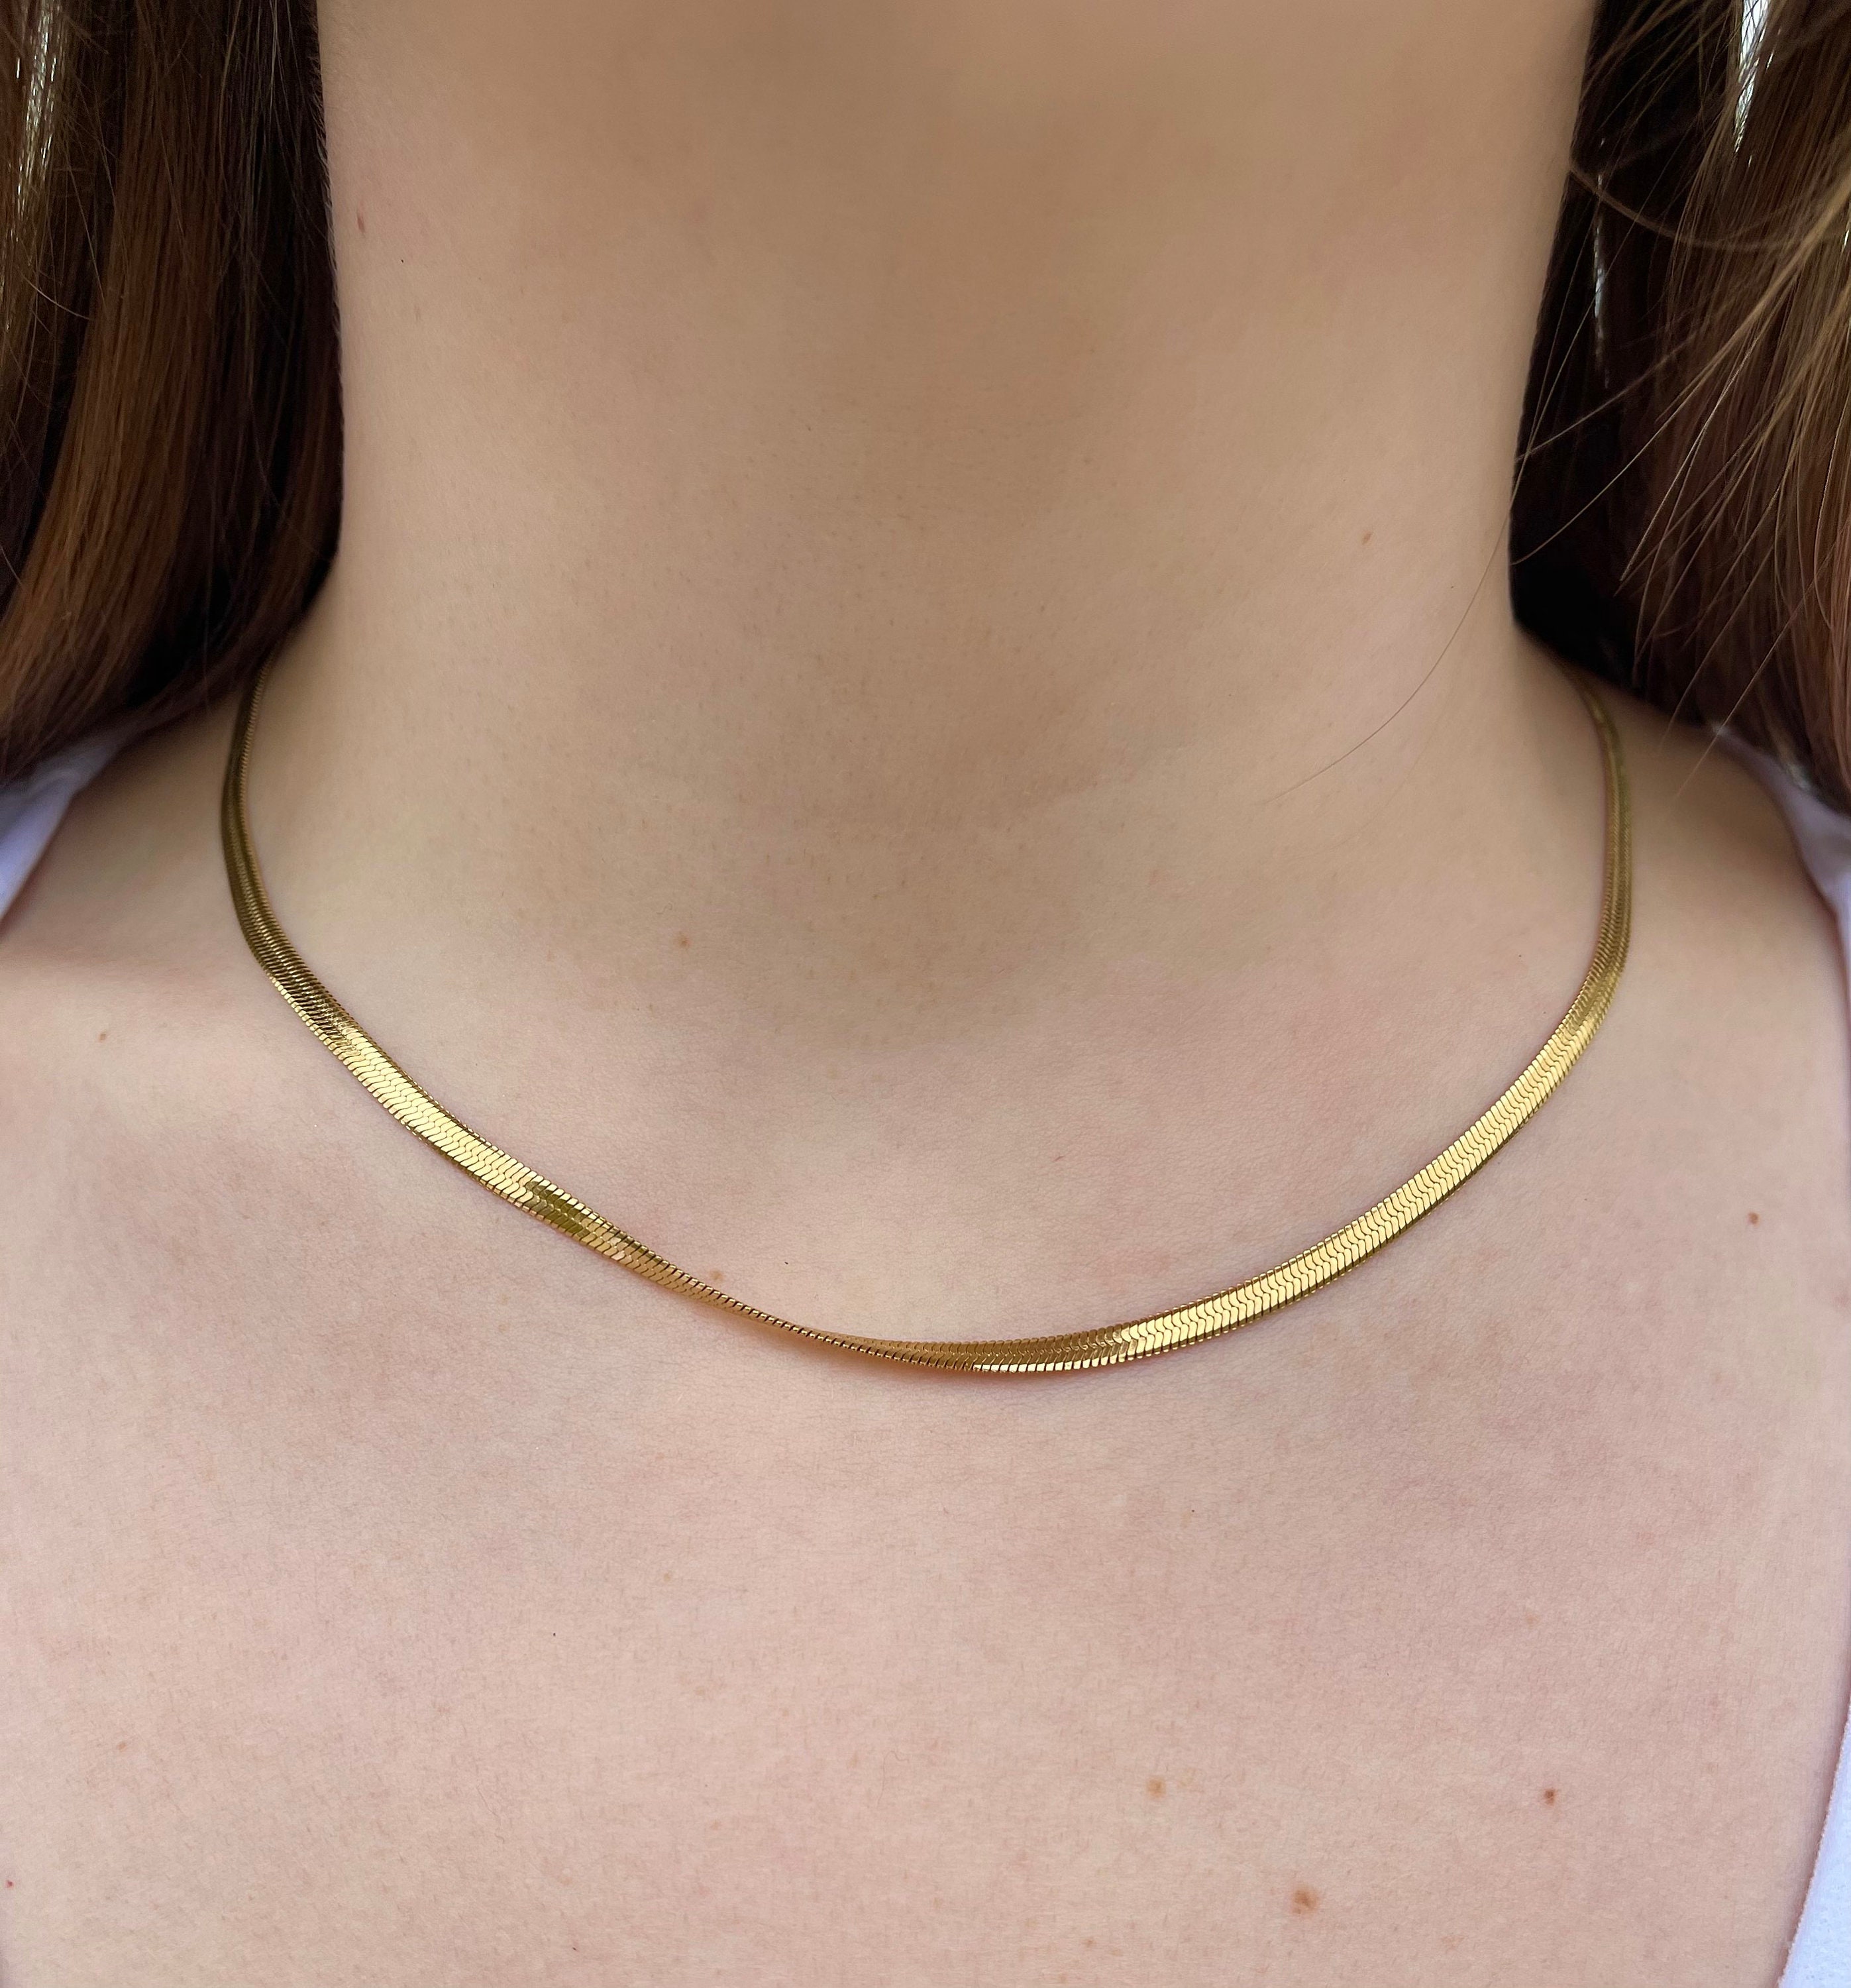 Paperclip chain Sieraden Kettingen Kettingen Thick chain necklace Gold Chain Necklace 18K Gold Filled Herringbone Necklace Gold Link Chain Layering necklace 